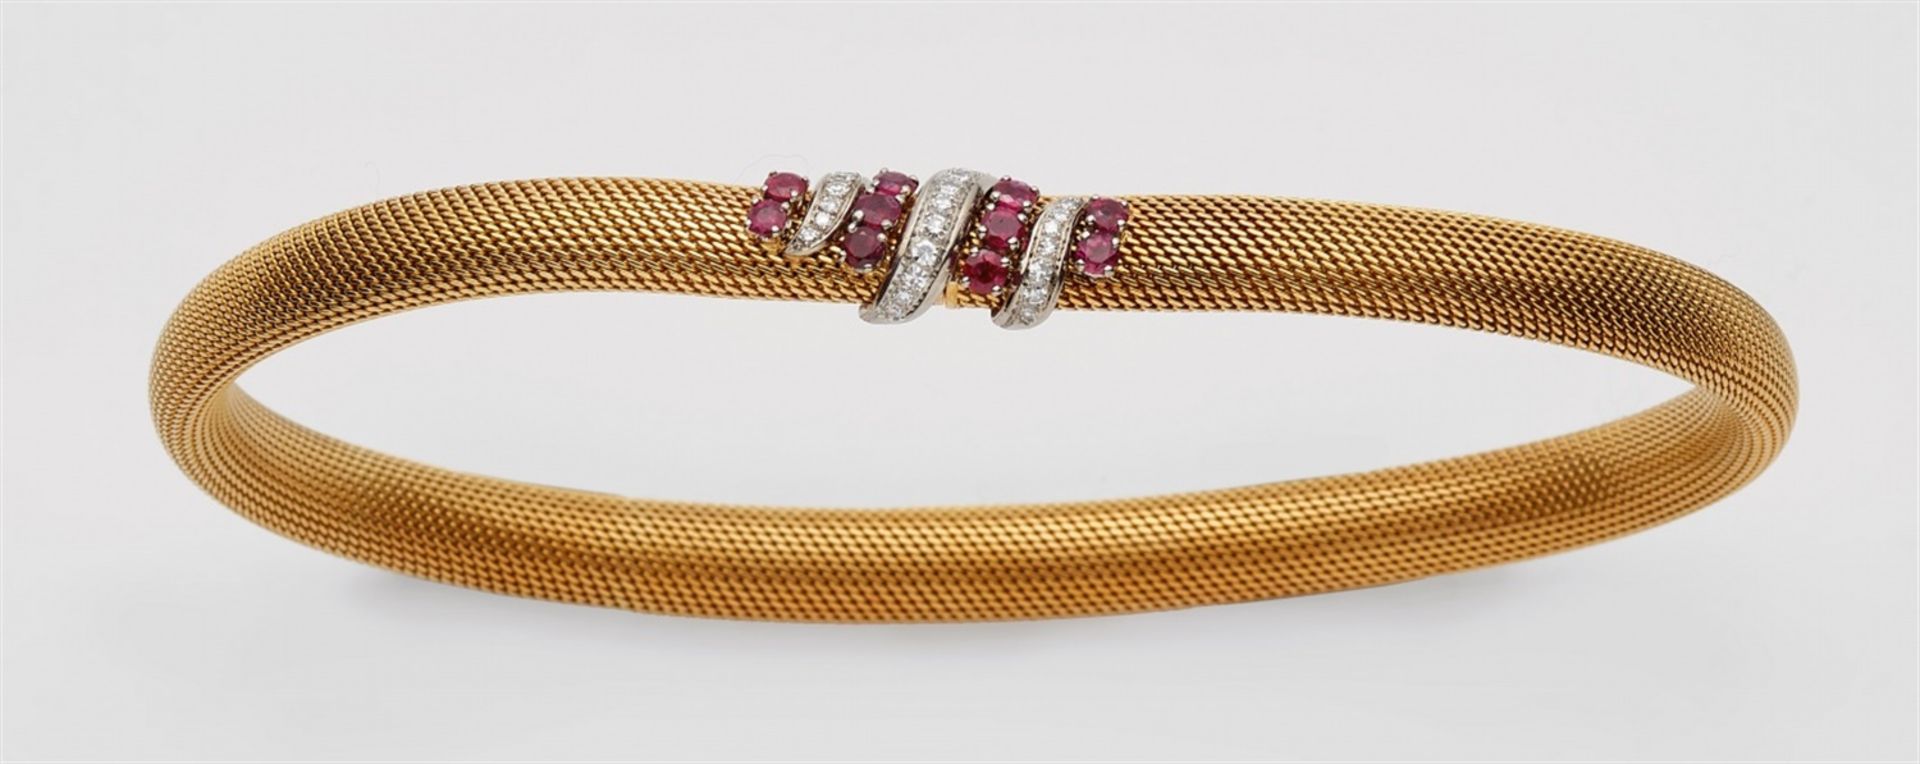 An 18k gold and ruby tubogaz necklace18k bi-coloured gold tubular necklace. The concealed snake-